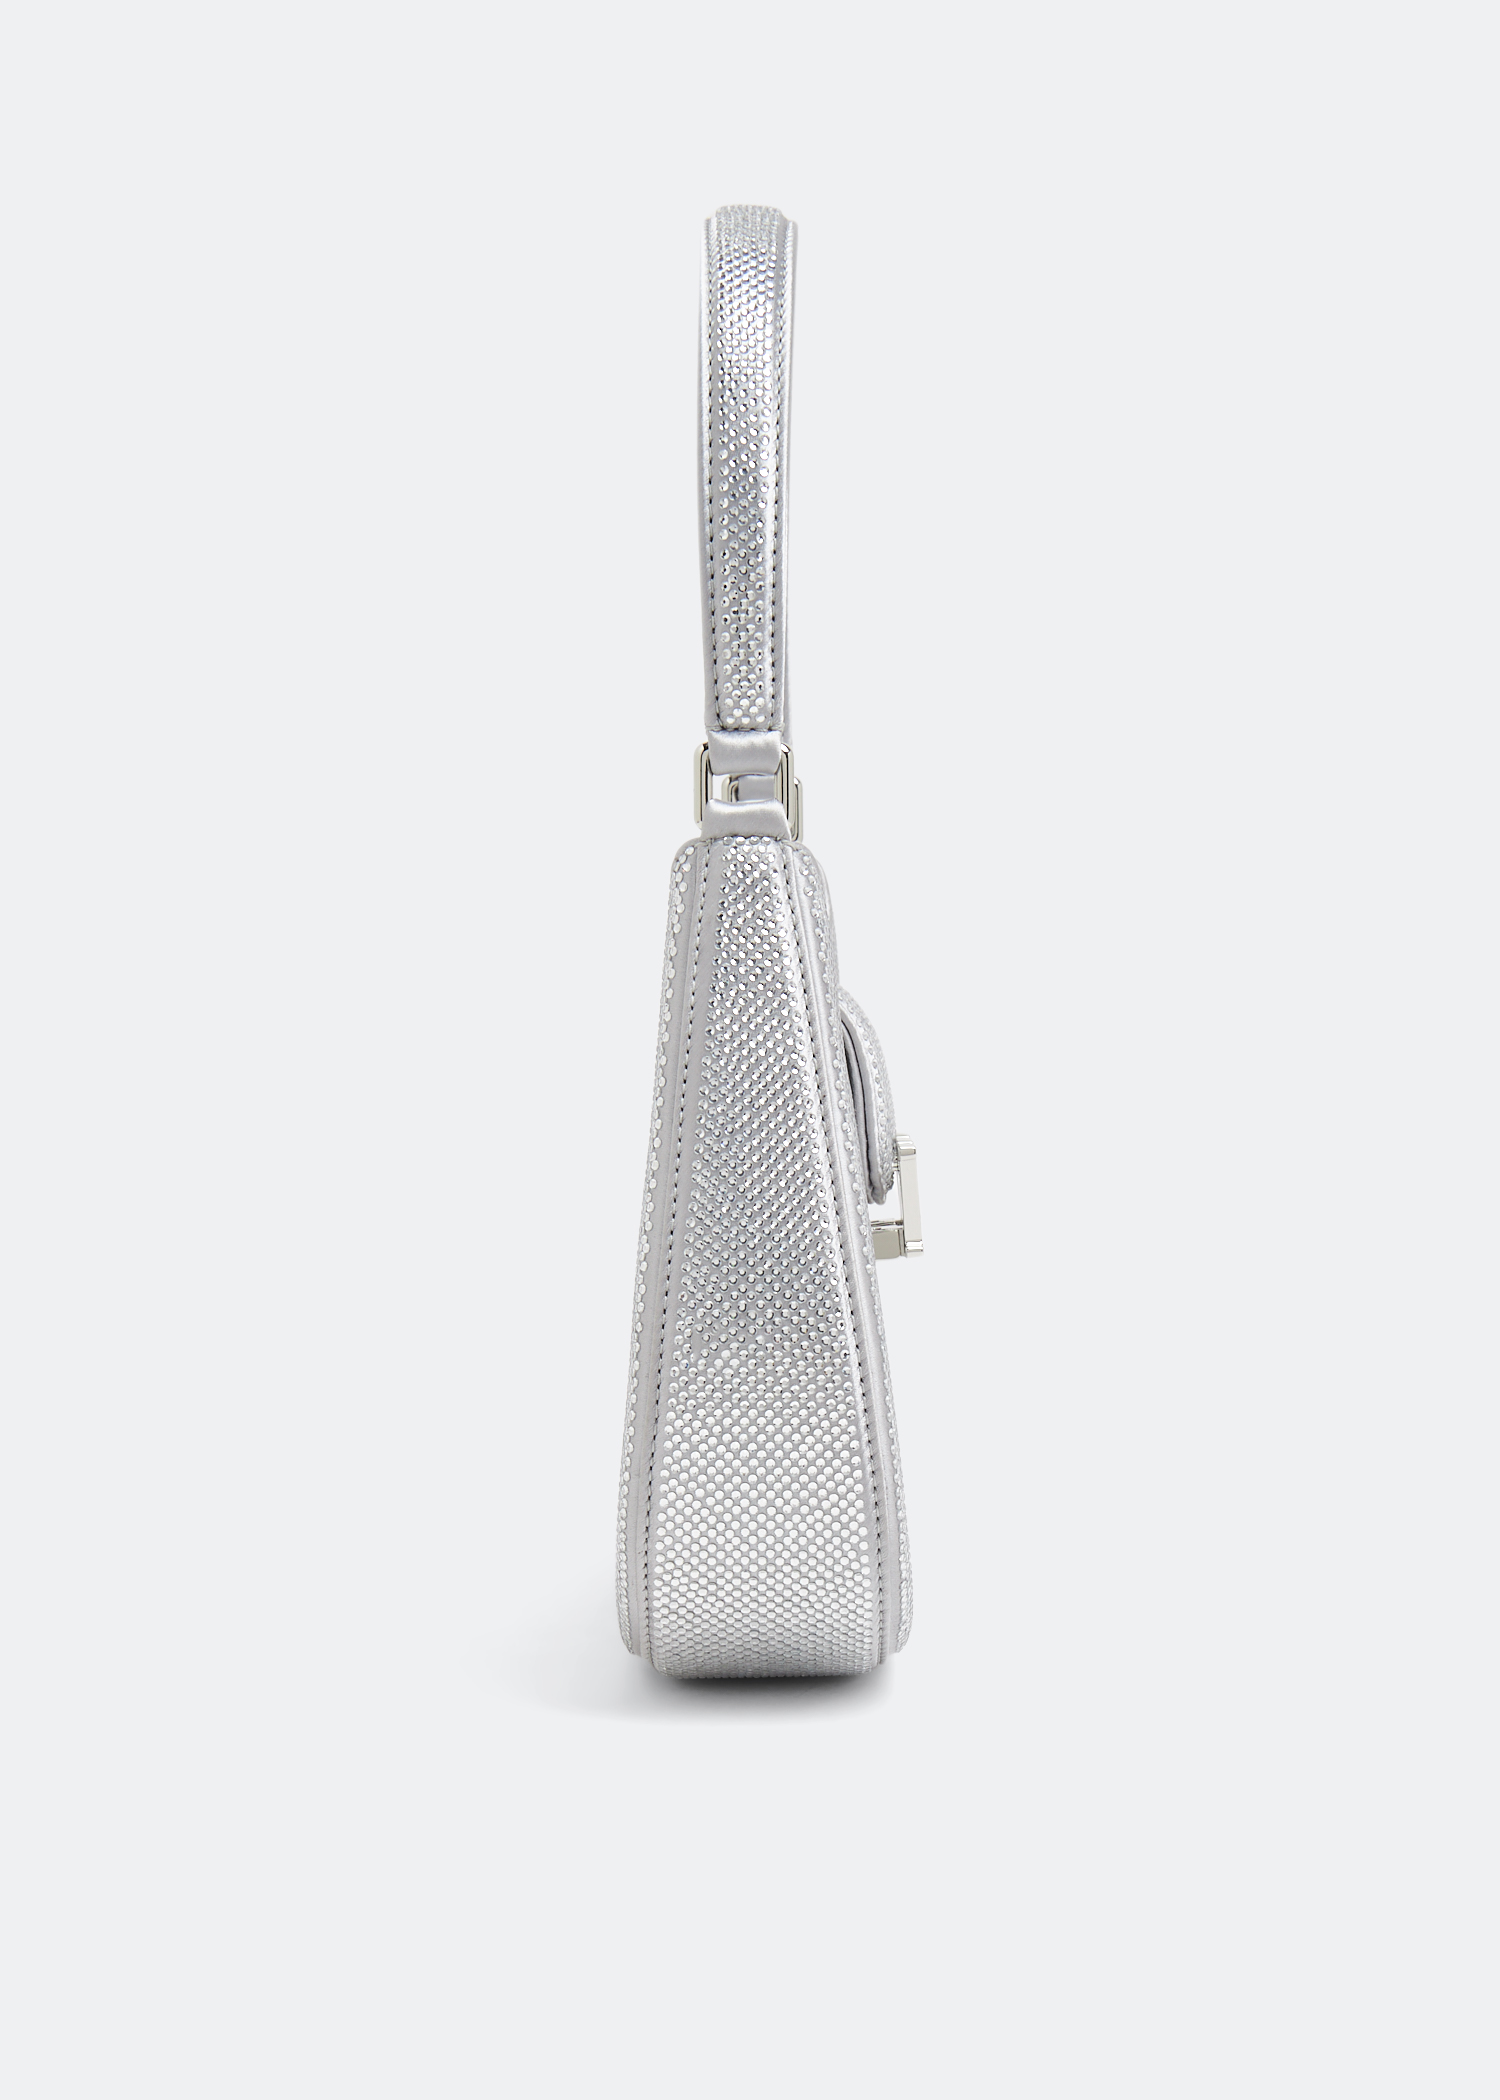 Alexander Wang W Legacy small hobo bag for Women - Silver in KSA 